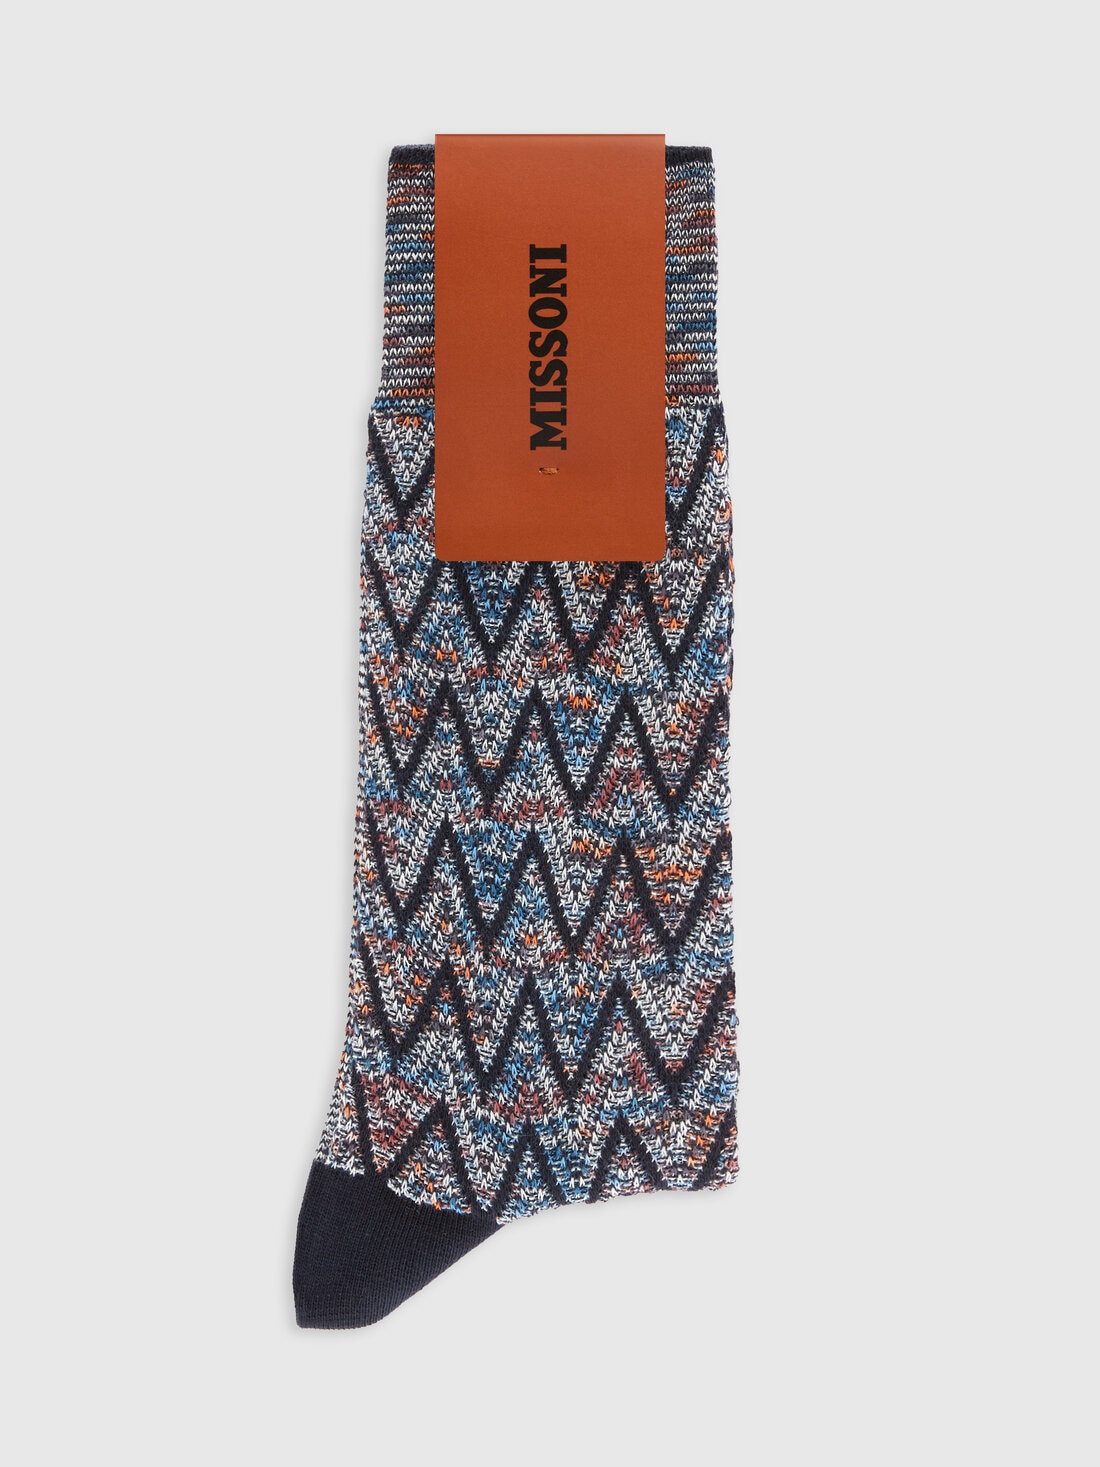 Zigzag cotton blend short socks, Multicoloured  - LS24SS0ABV00FTSM67U - 1